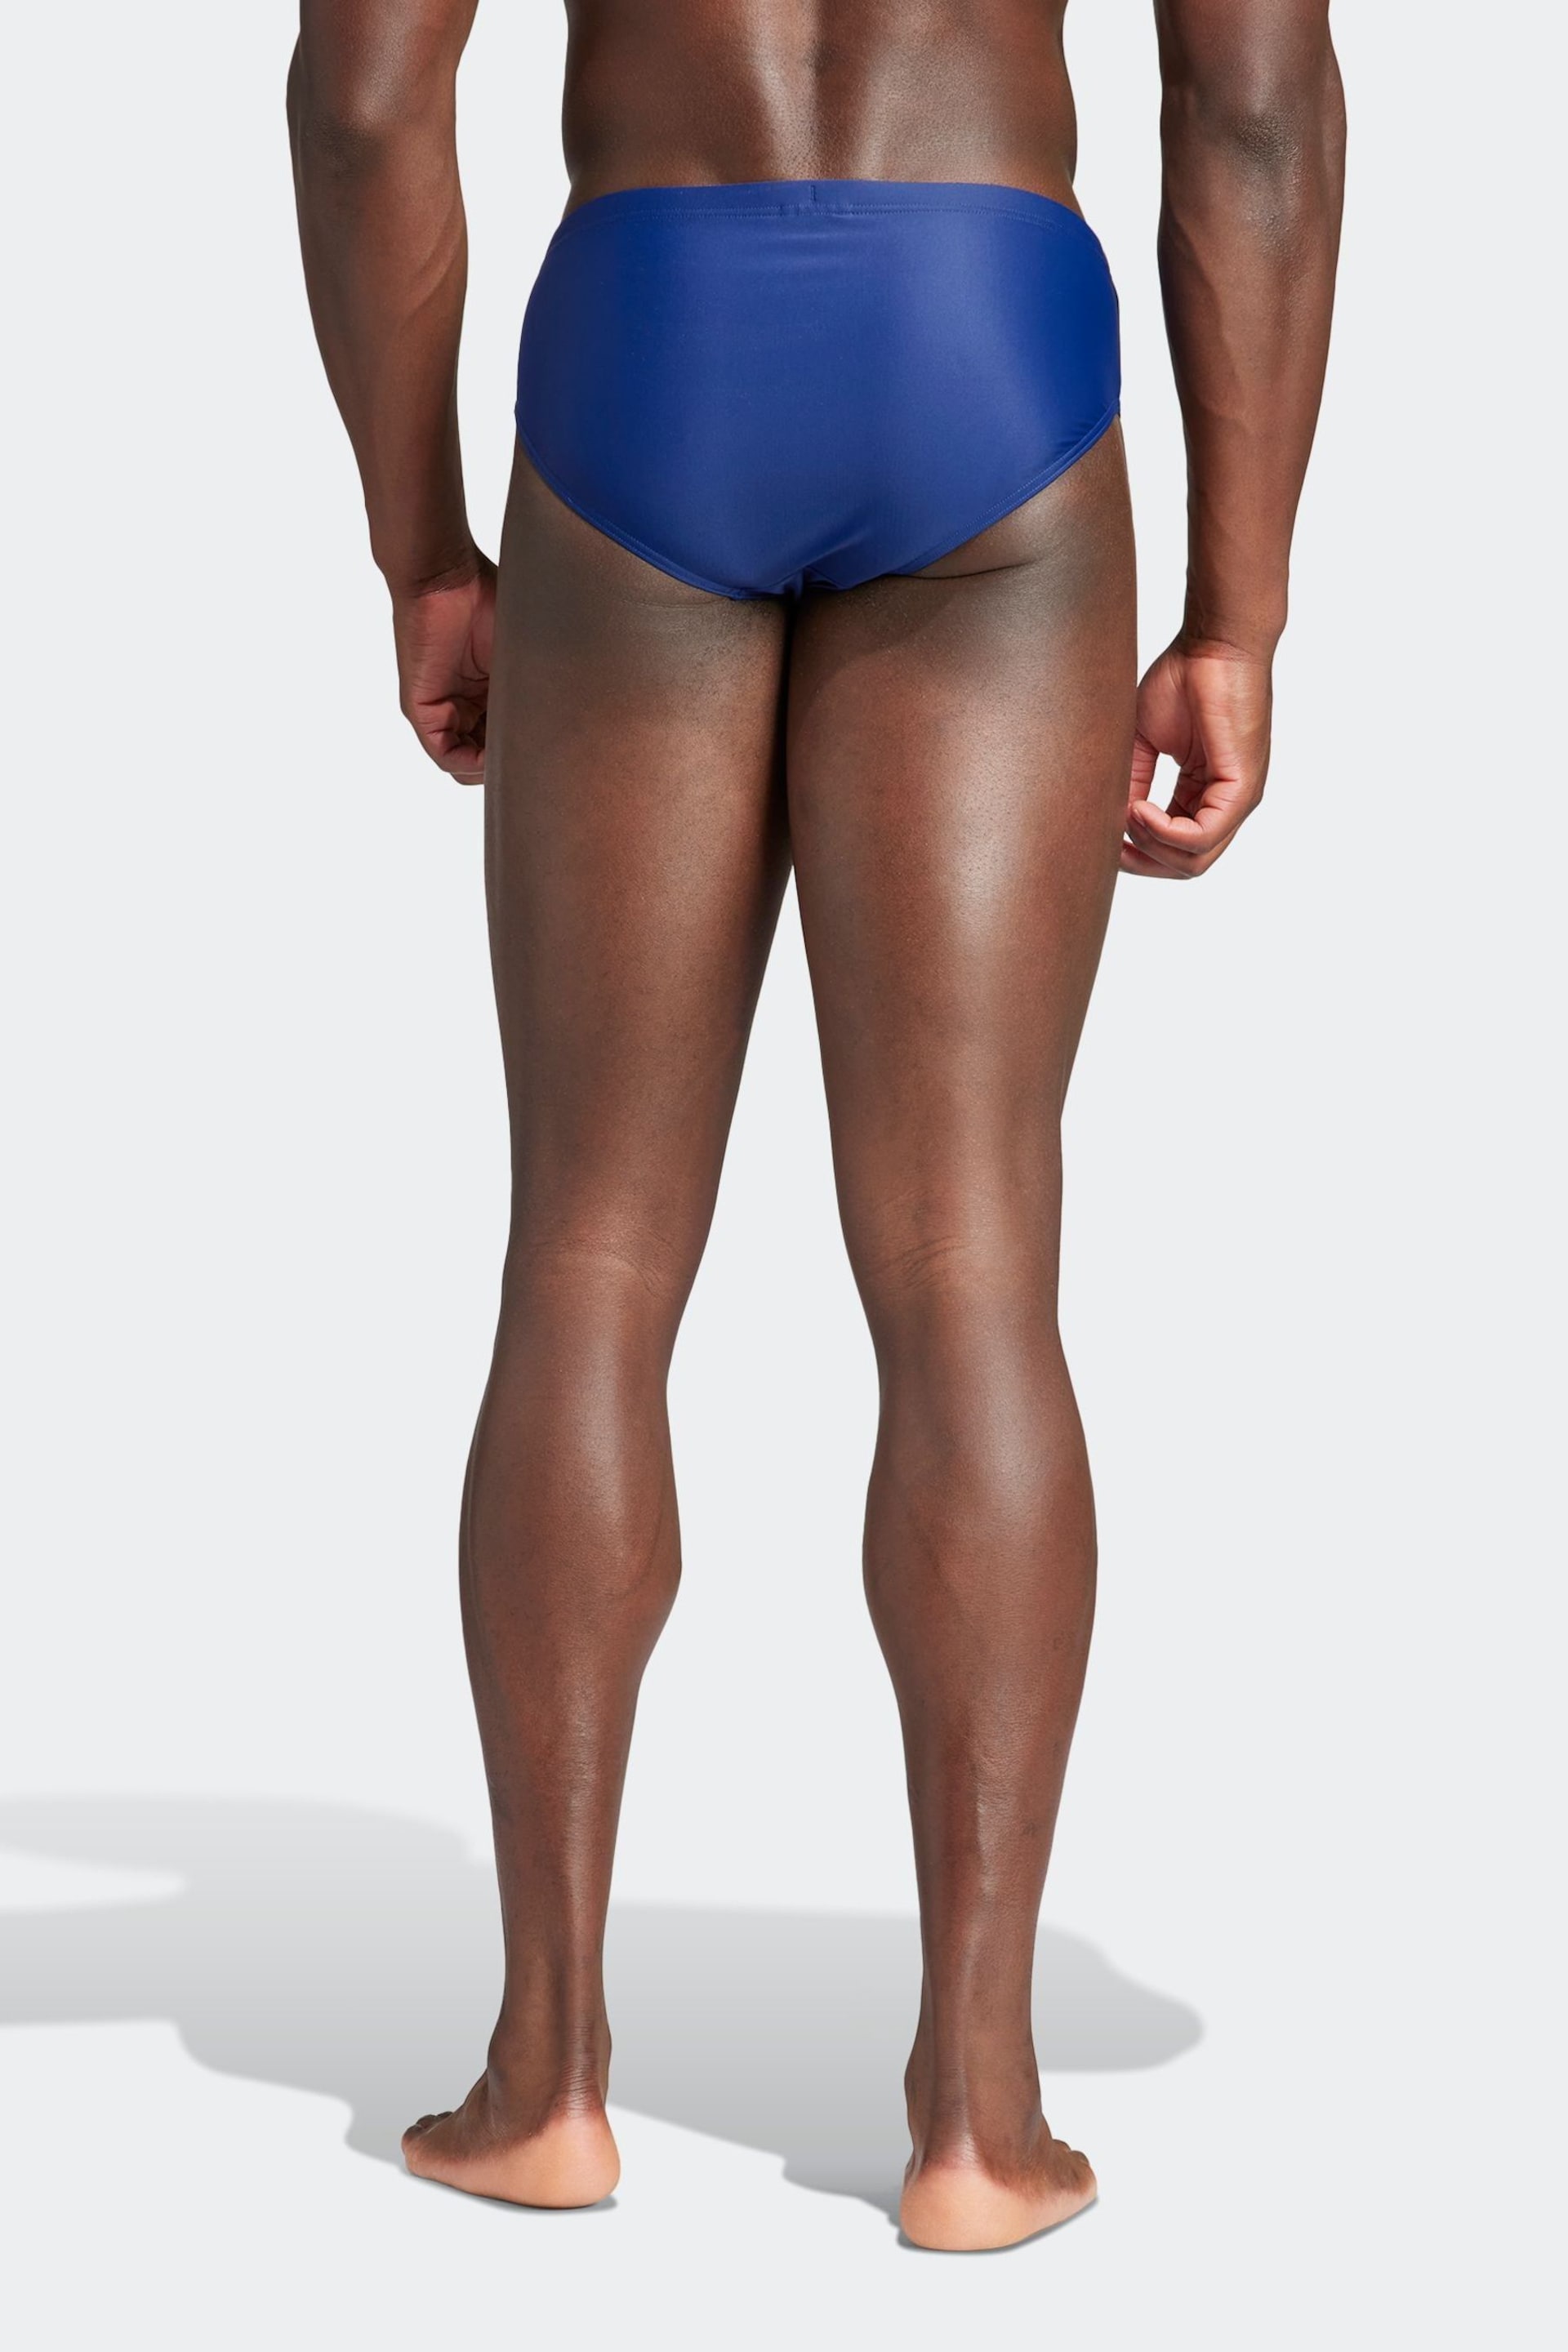 adidas Blue Solid Swim Trunks - Image 2 of 6